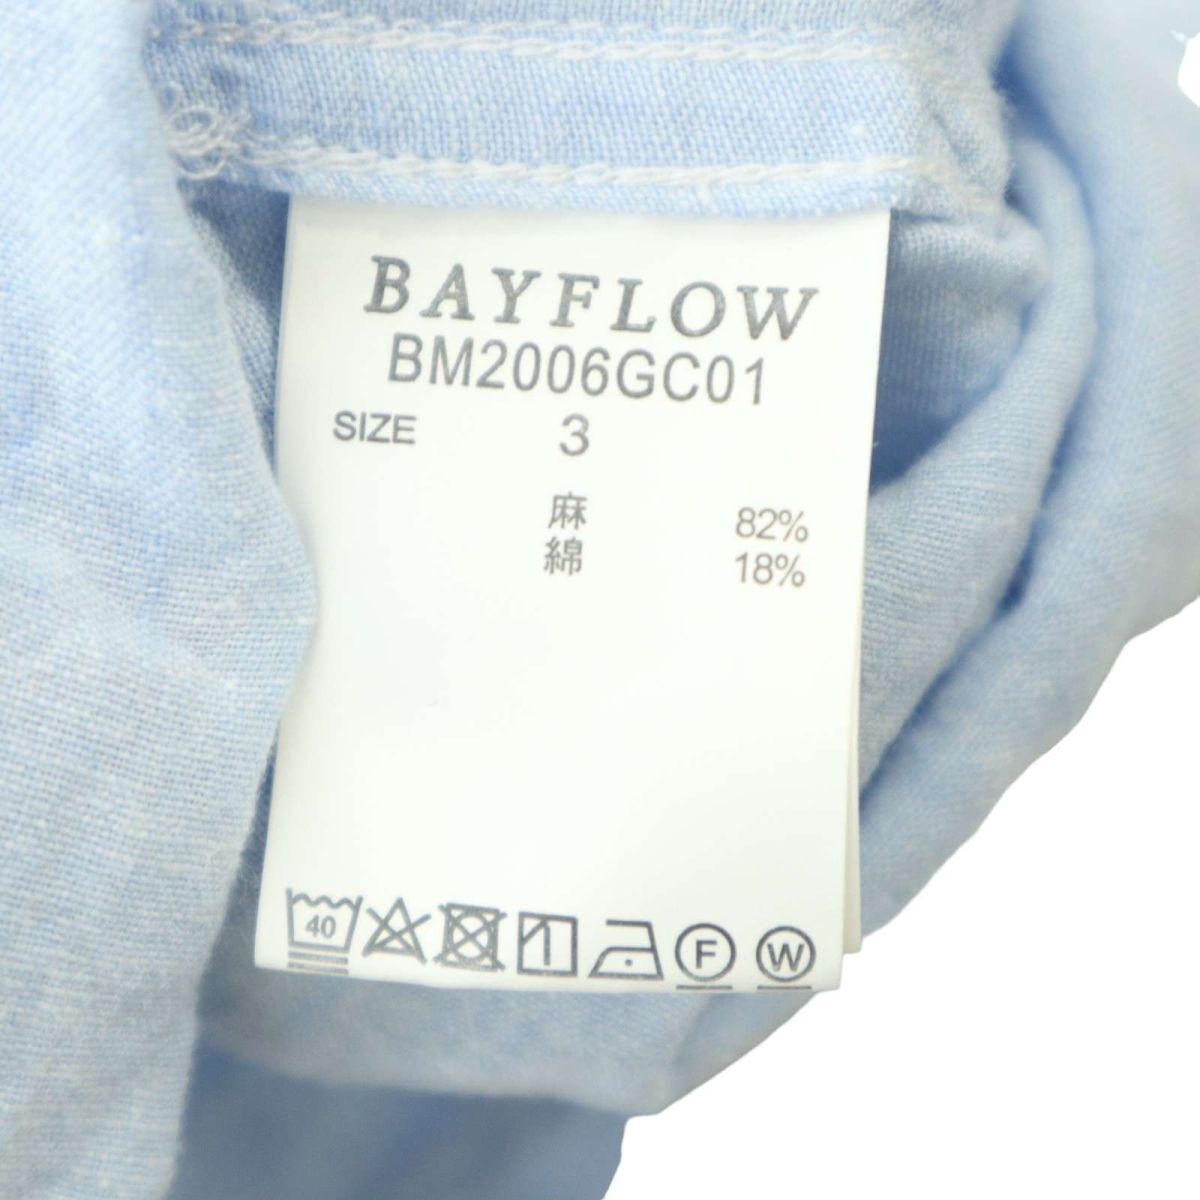 BAYFLOW Bay поток весна лето [ лен linen]pa-m tree вышивка * 7 минут рукав рубашка Sz.3 мужской бледно-голубой синий серия A4T02949_3#A